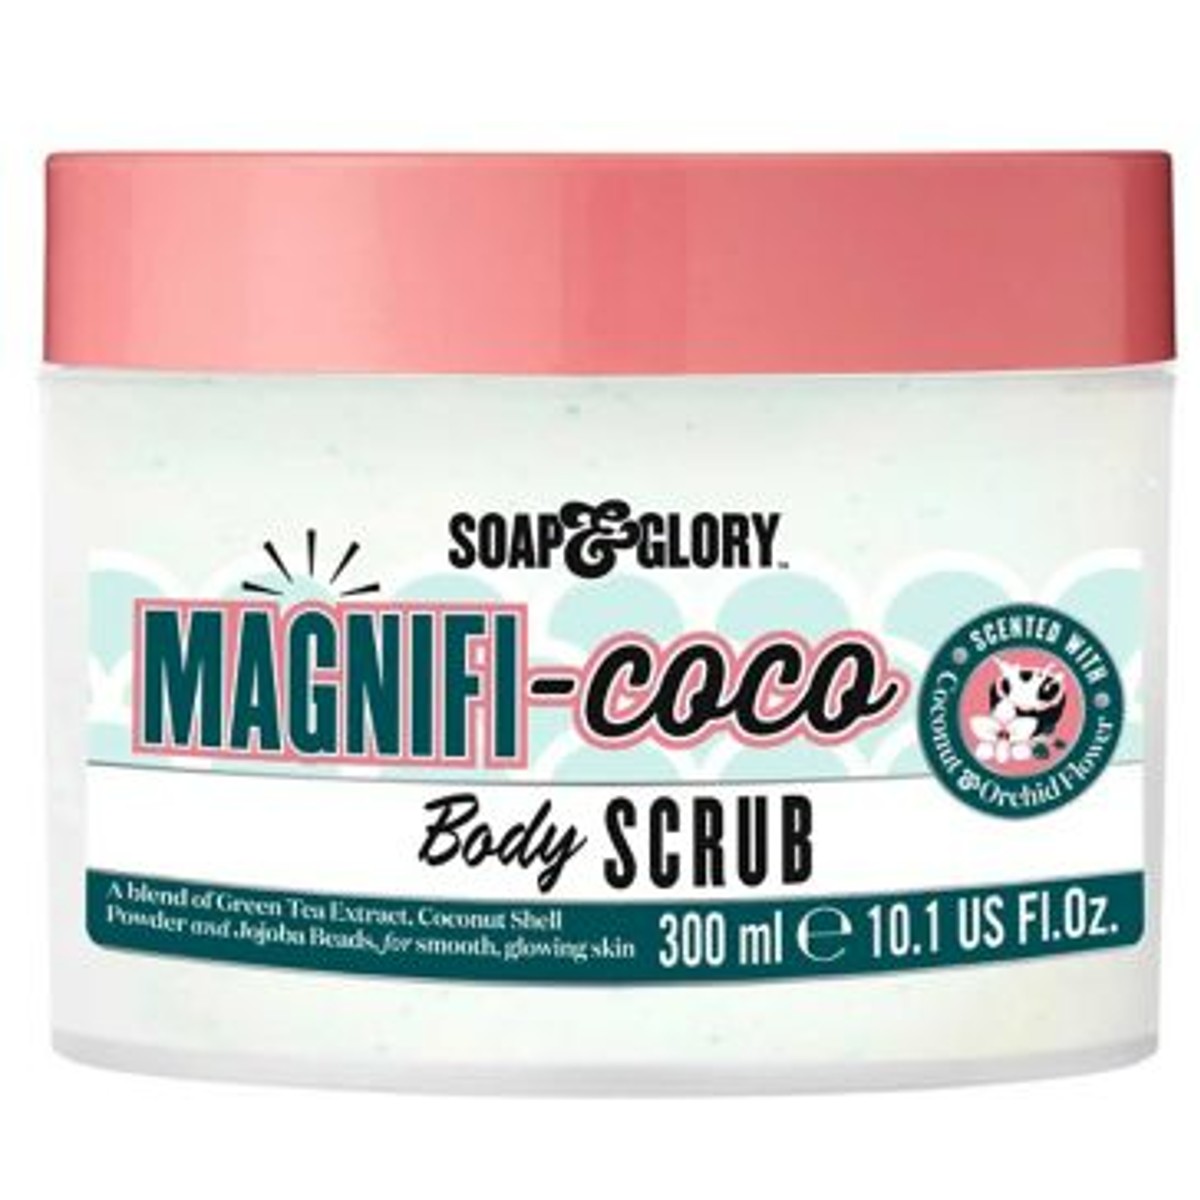 Magnifi-coco Buff And Ready Exfoliating Coconut Body Scrub